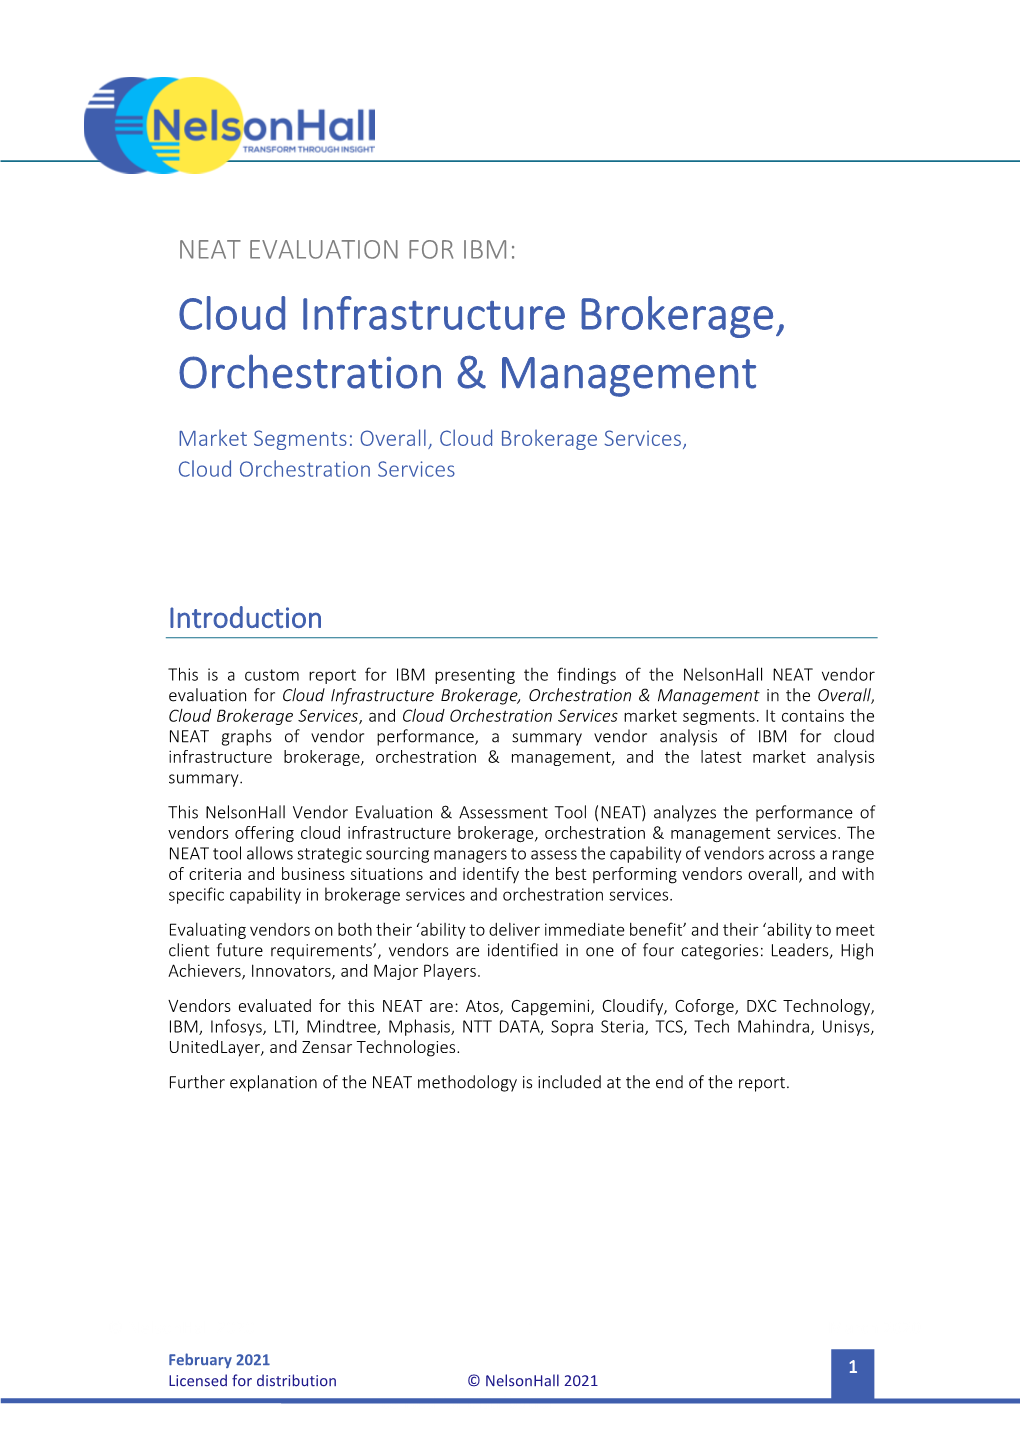 Cloud Infrastructure Brokerage, Orchestration & Management